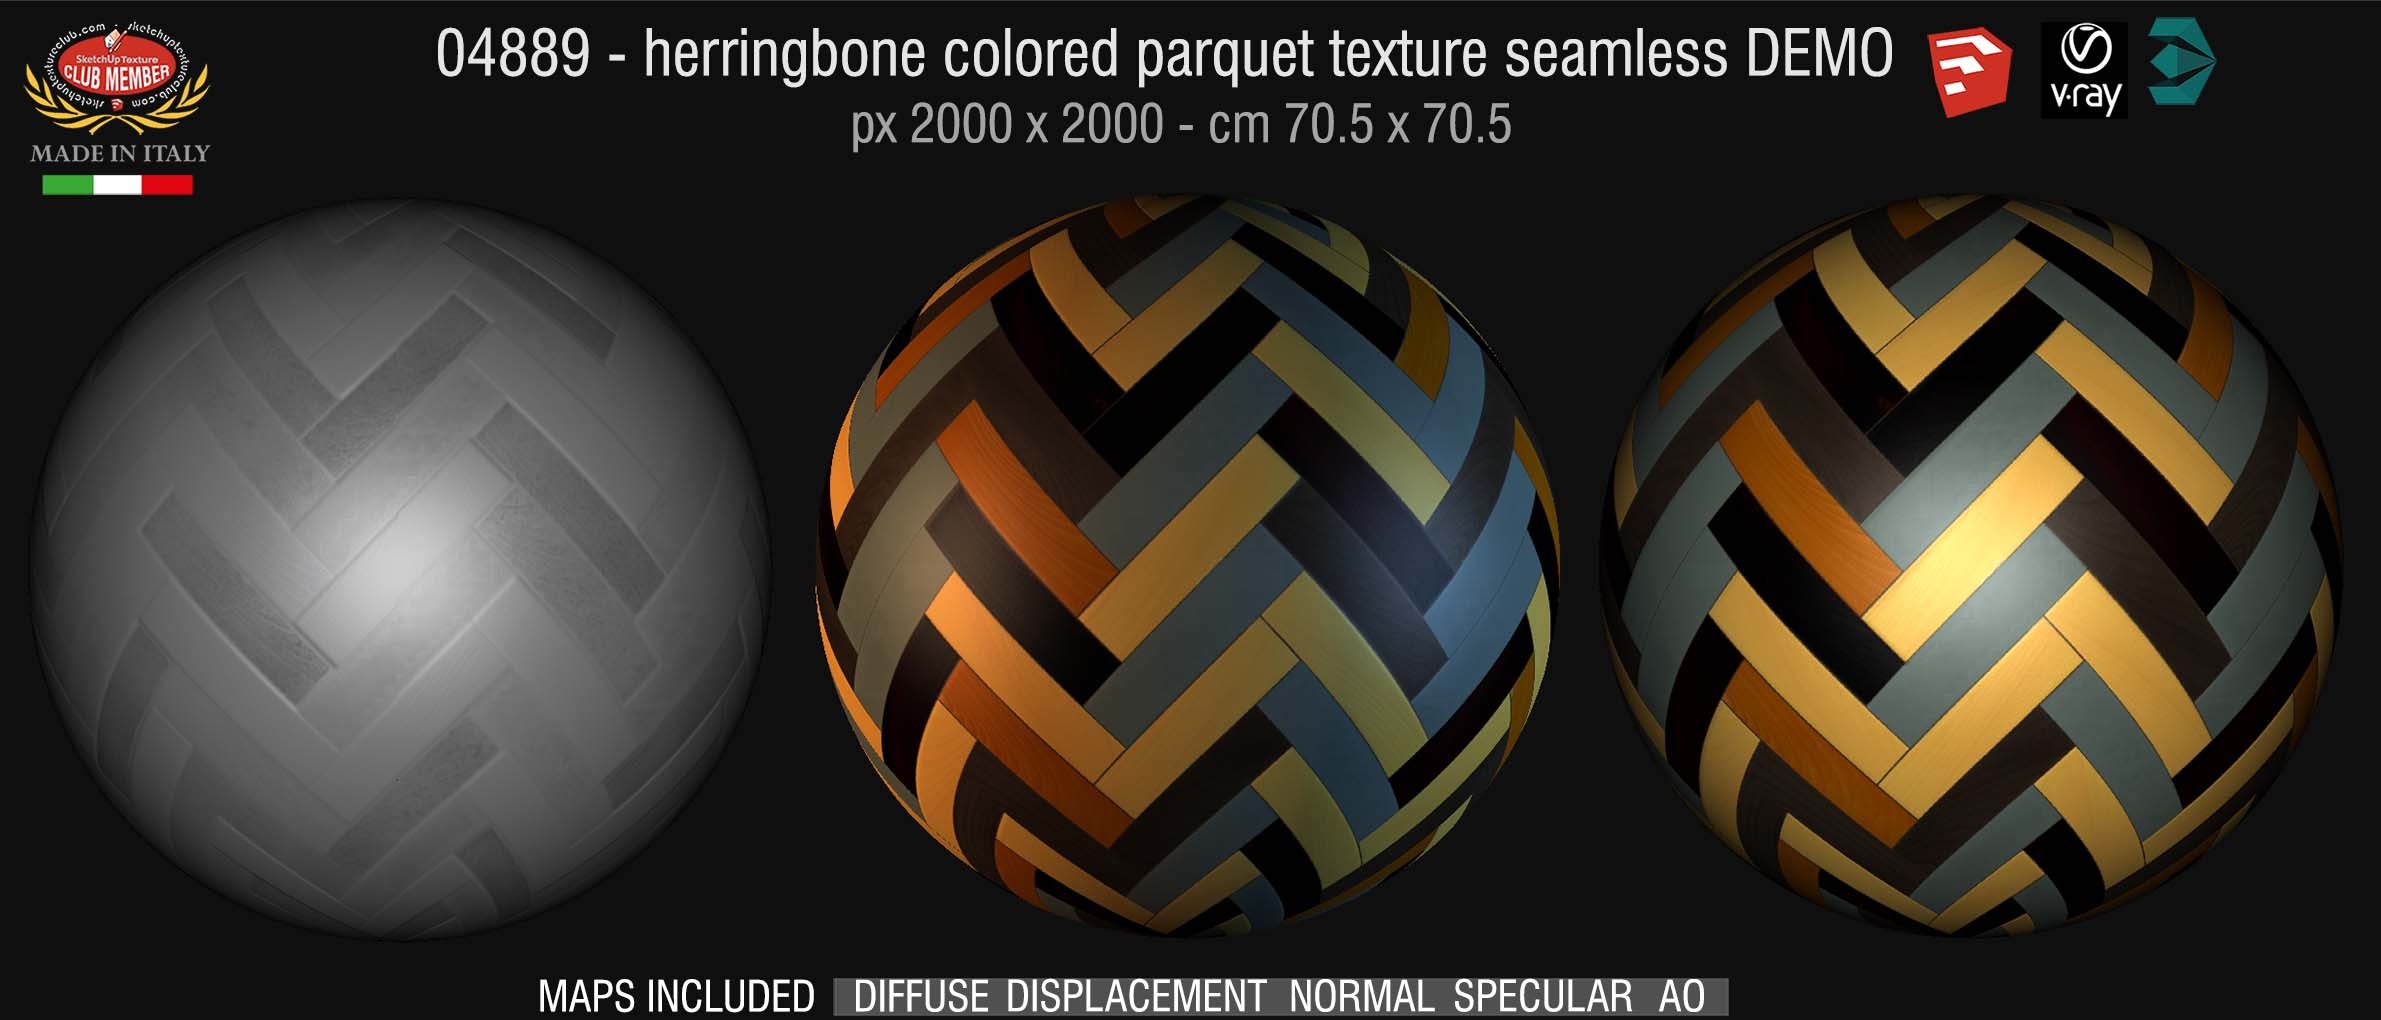 04889 HR Herringbone colored parquet texture seamless + maps DEMO